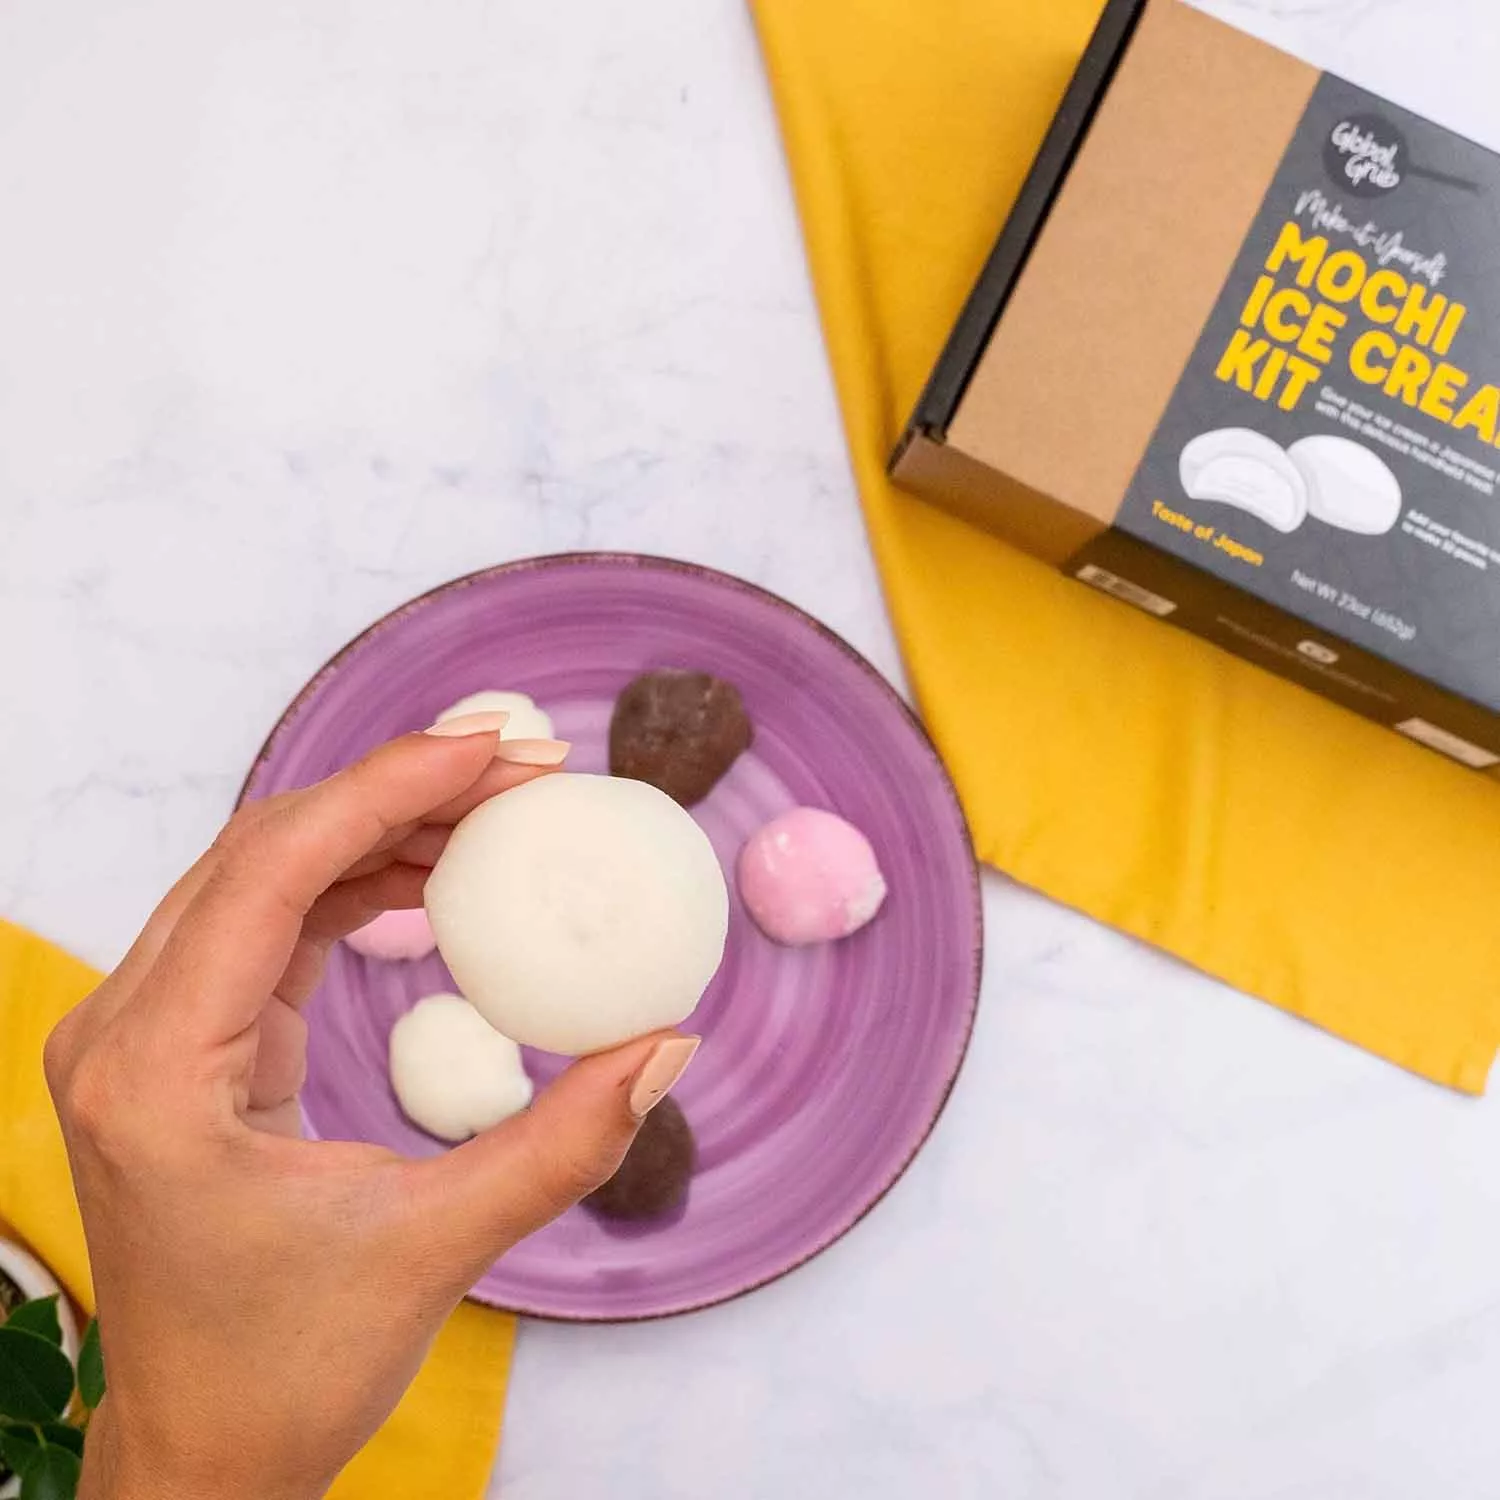 Global Grub DIY Mochi Donut Kit